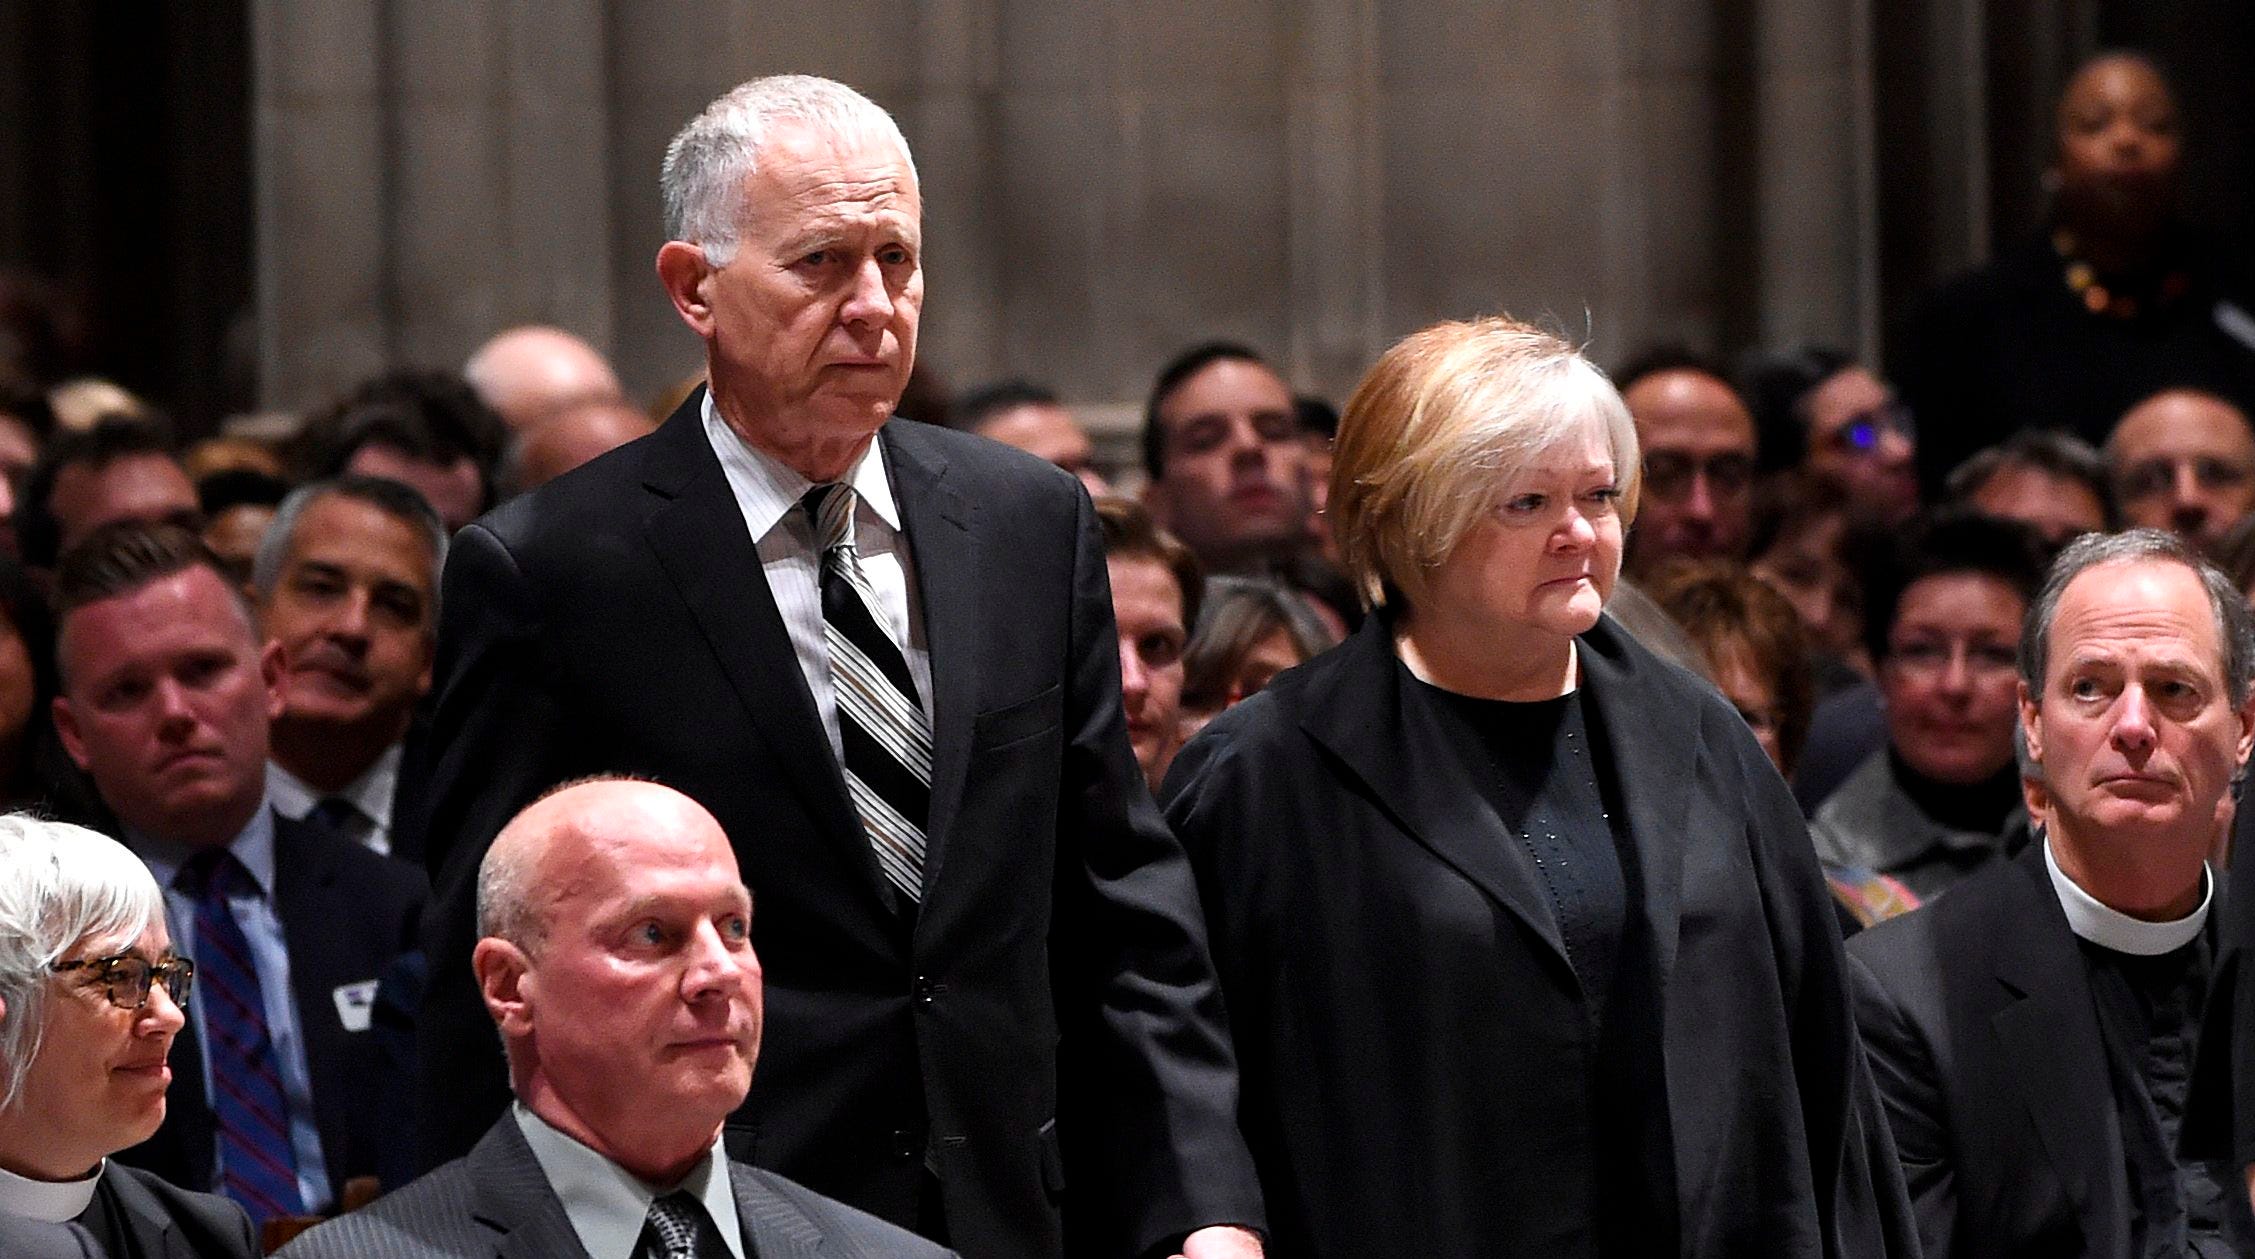 Ashes of Matthew Shepard interred at Washington National Cathedral